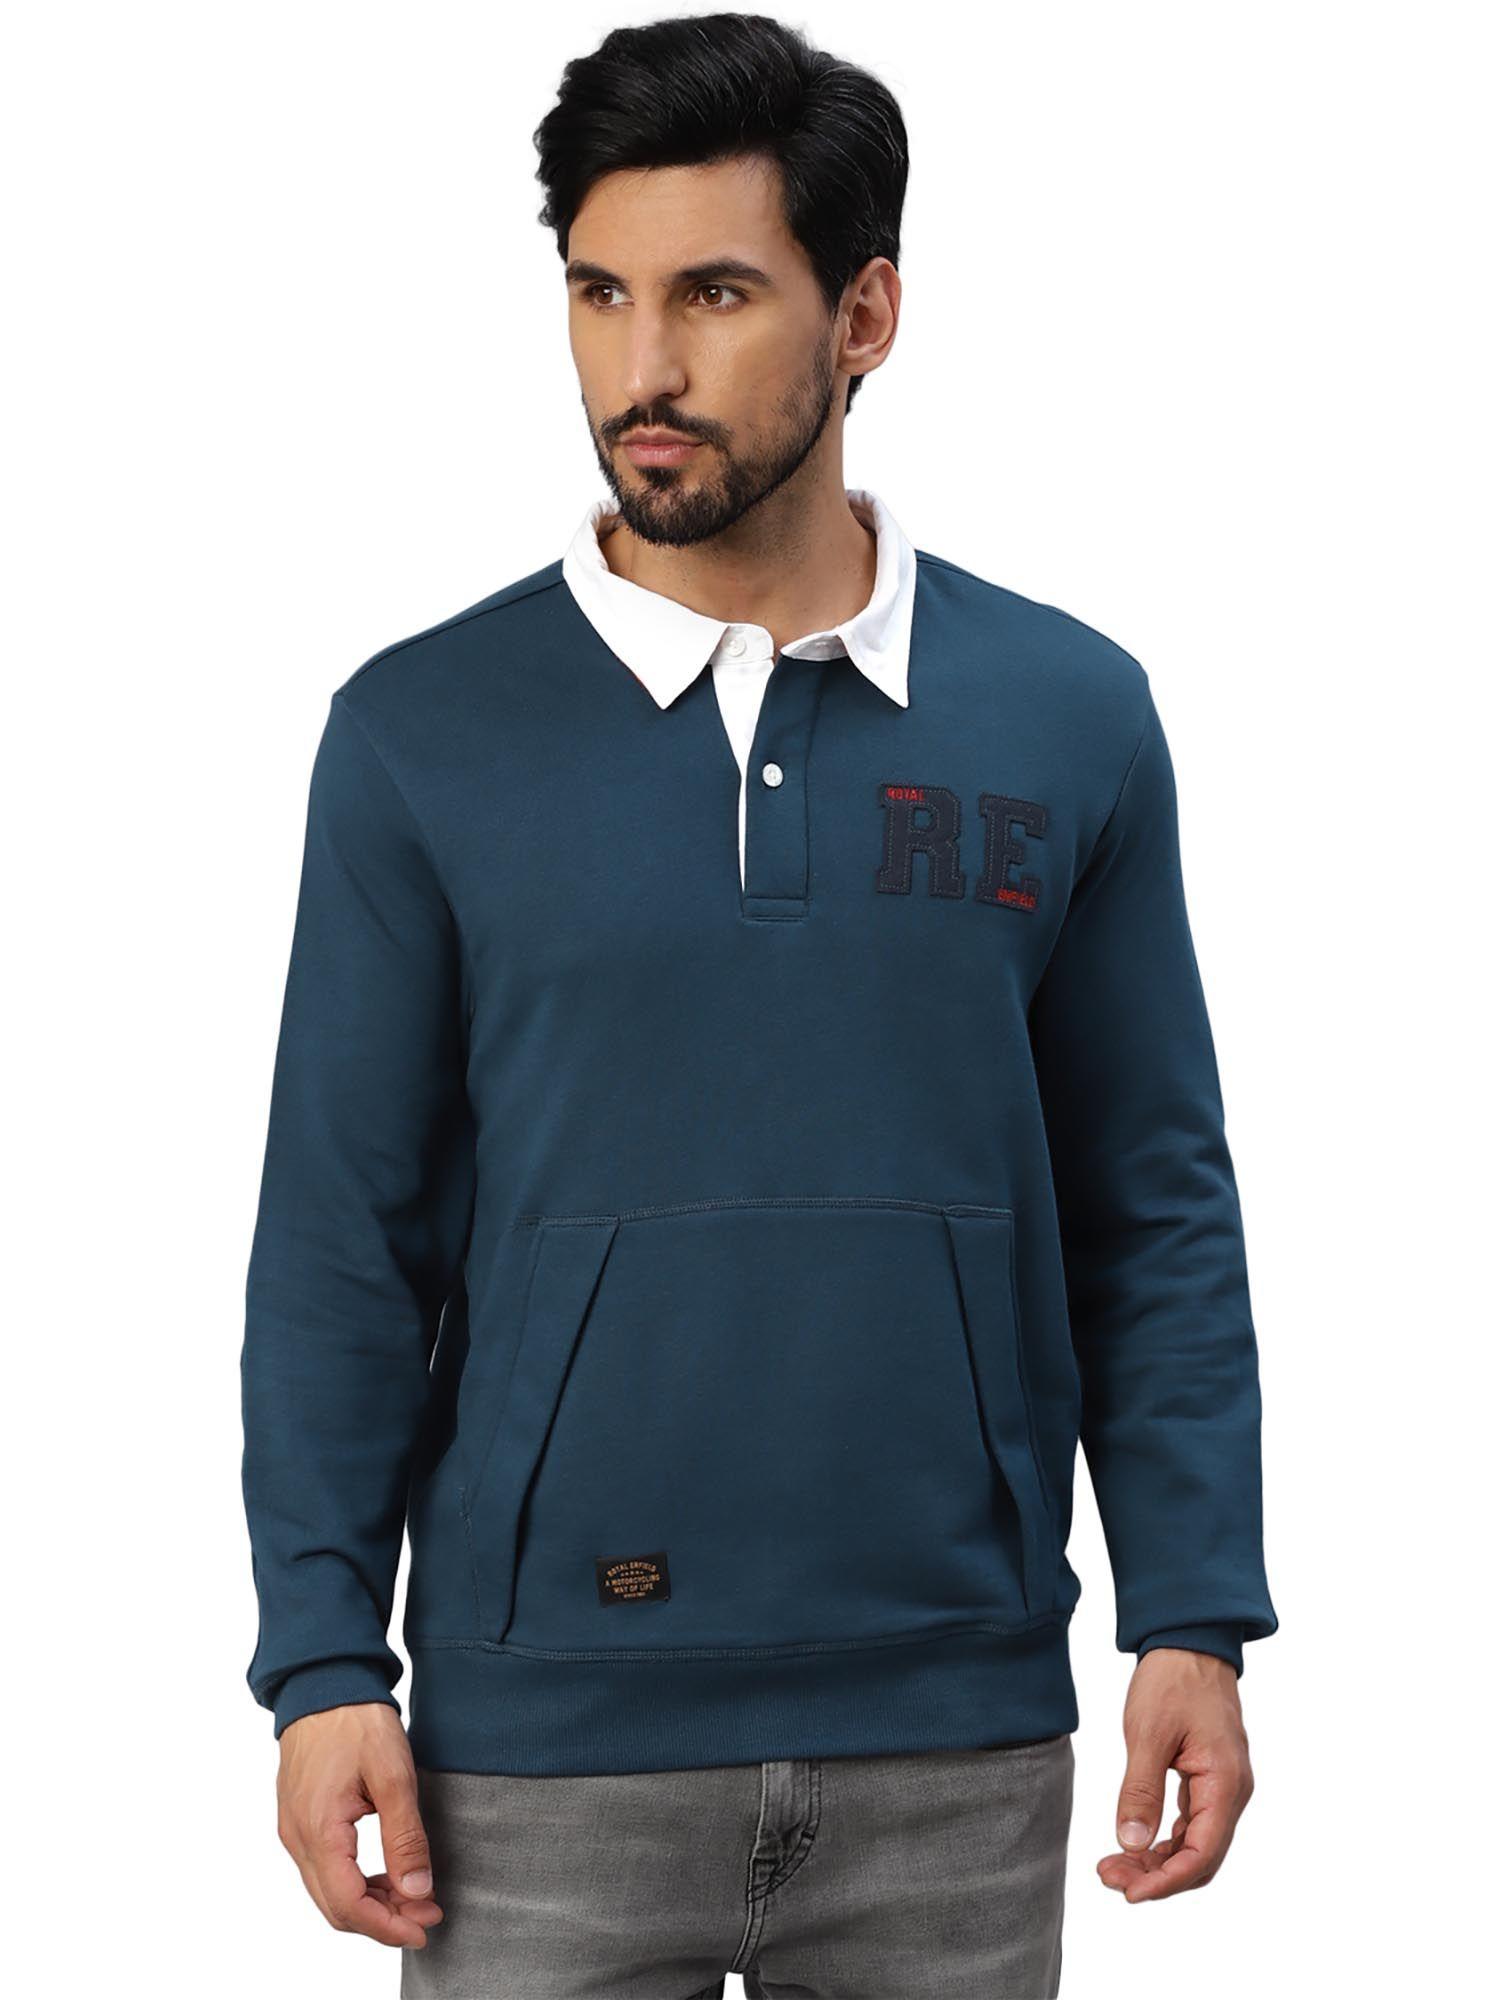 re polo sweatshirt blue